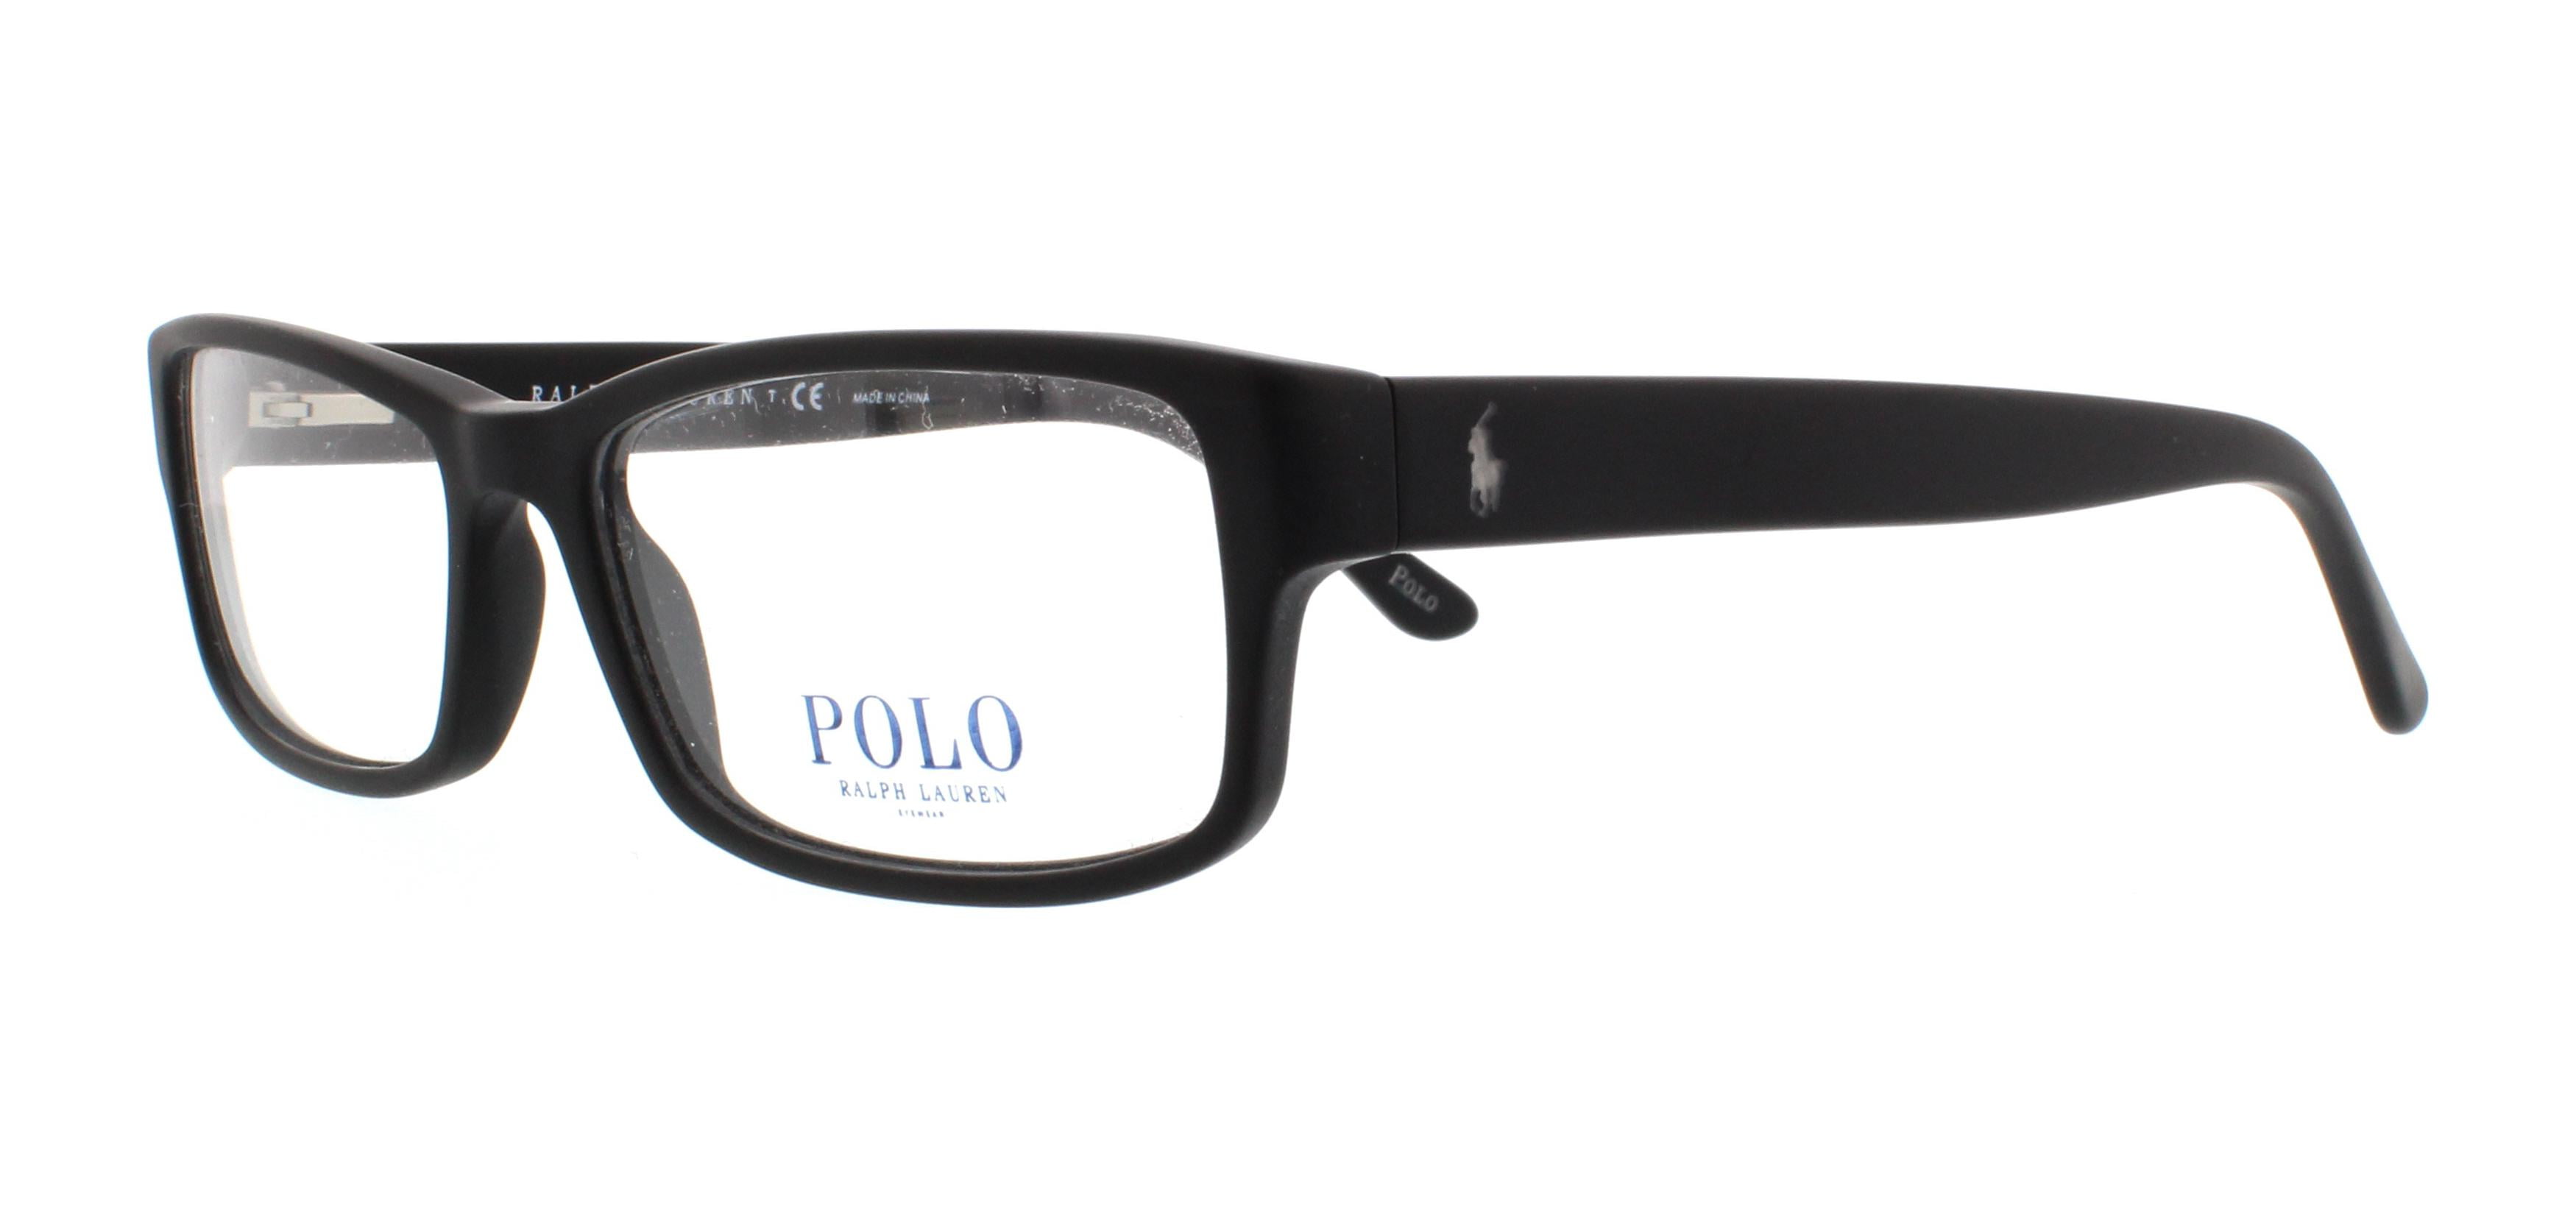 polo glasses 2065